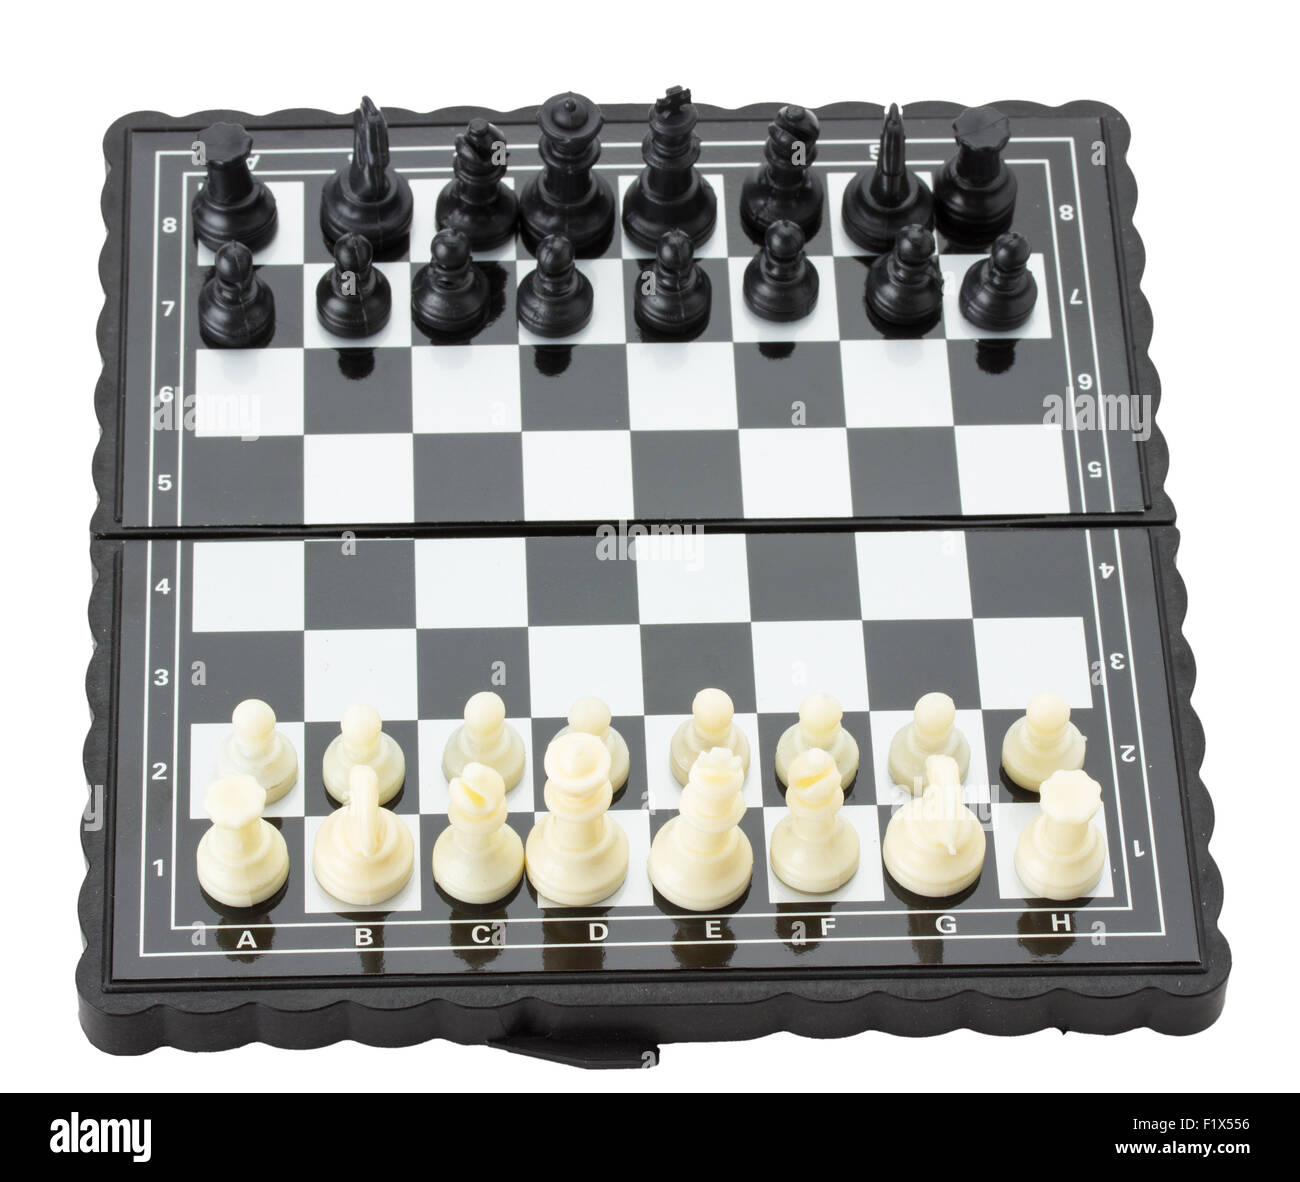 Sol&Lua_Natureza  Chess board, Black and white wallpaper, Chess